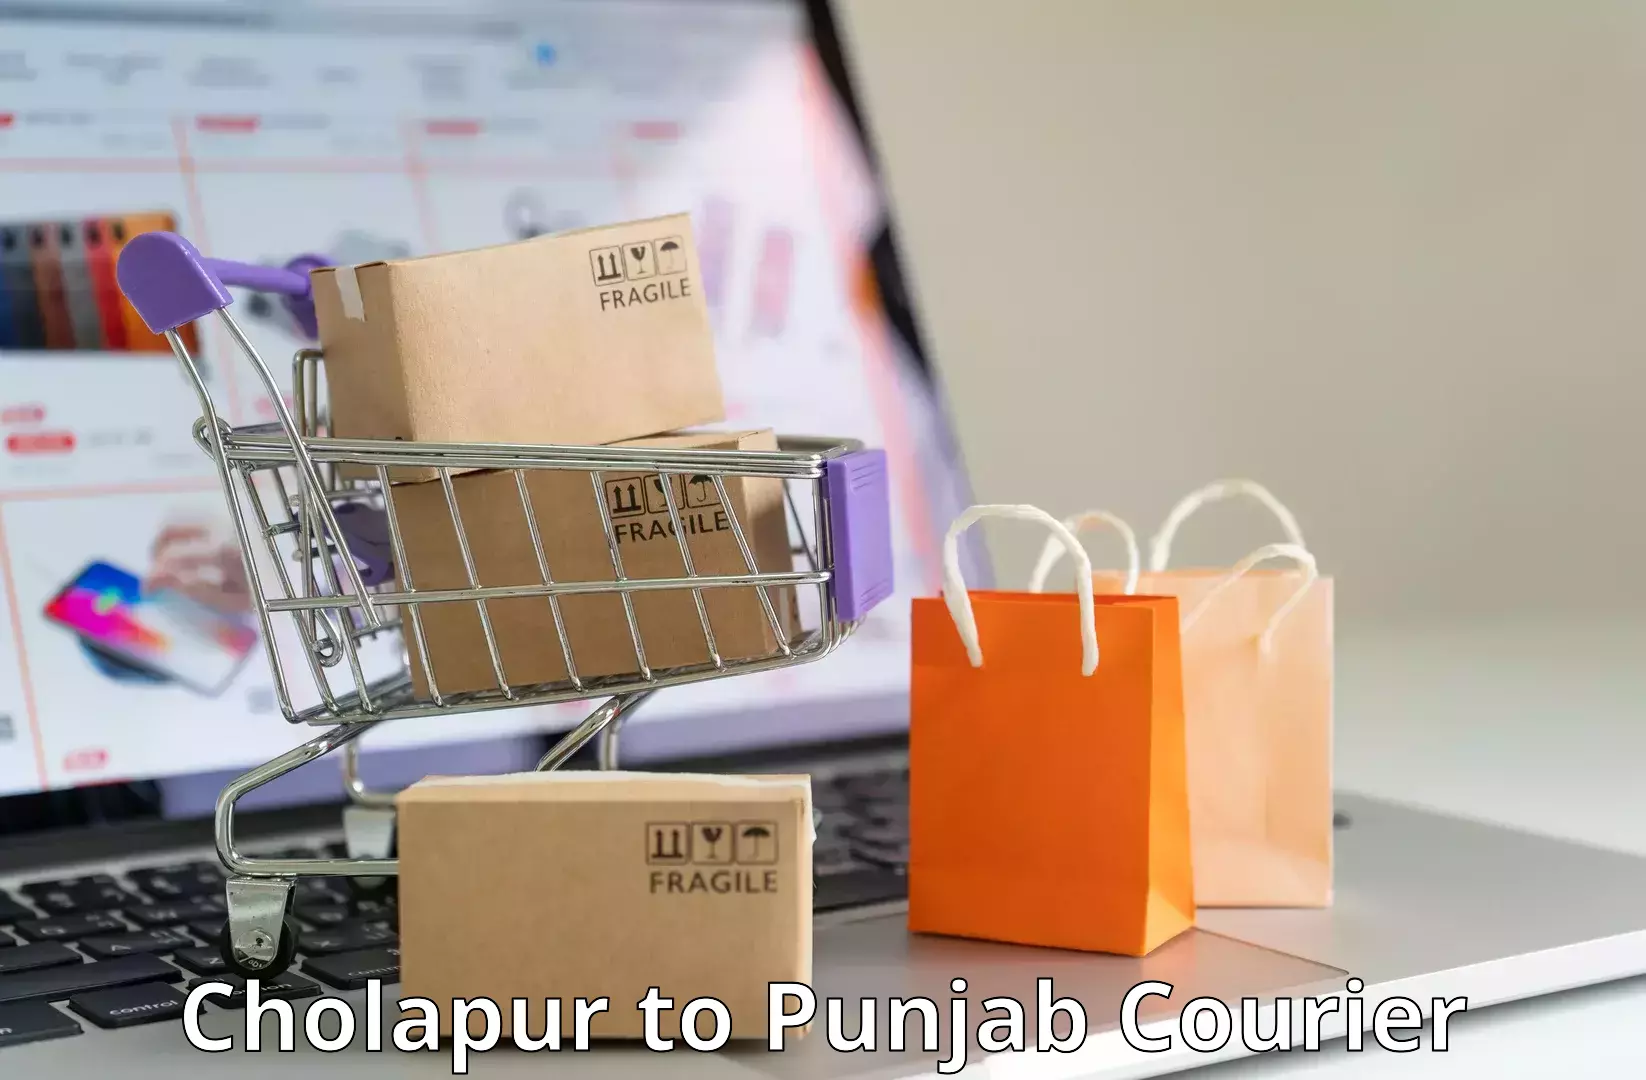 Small parcel delivery Cholapur to Jalandhar